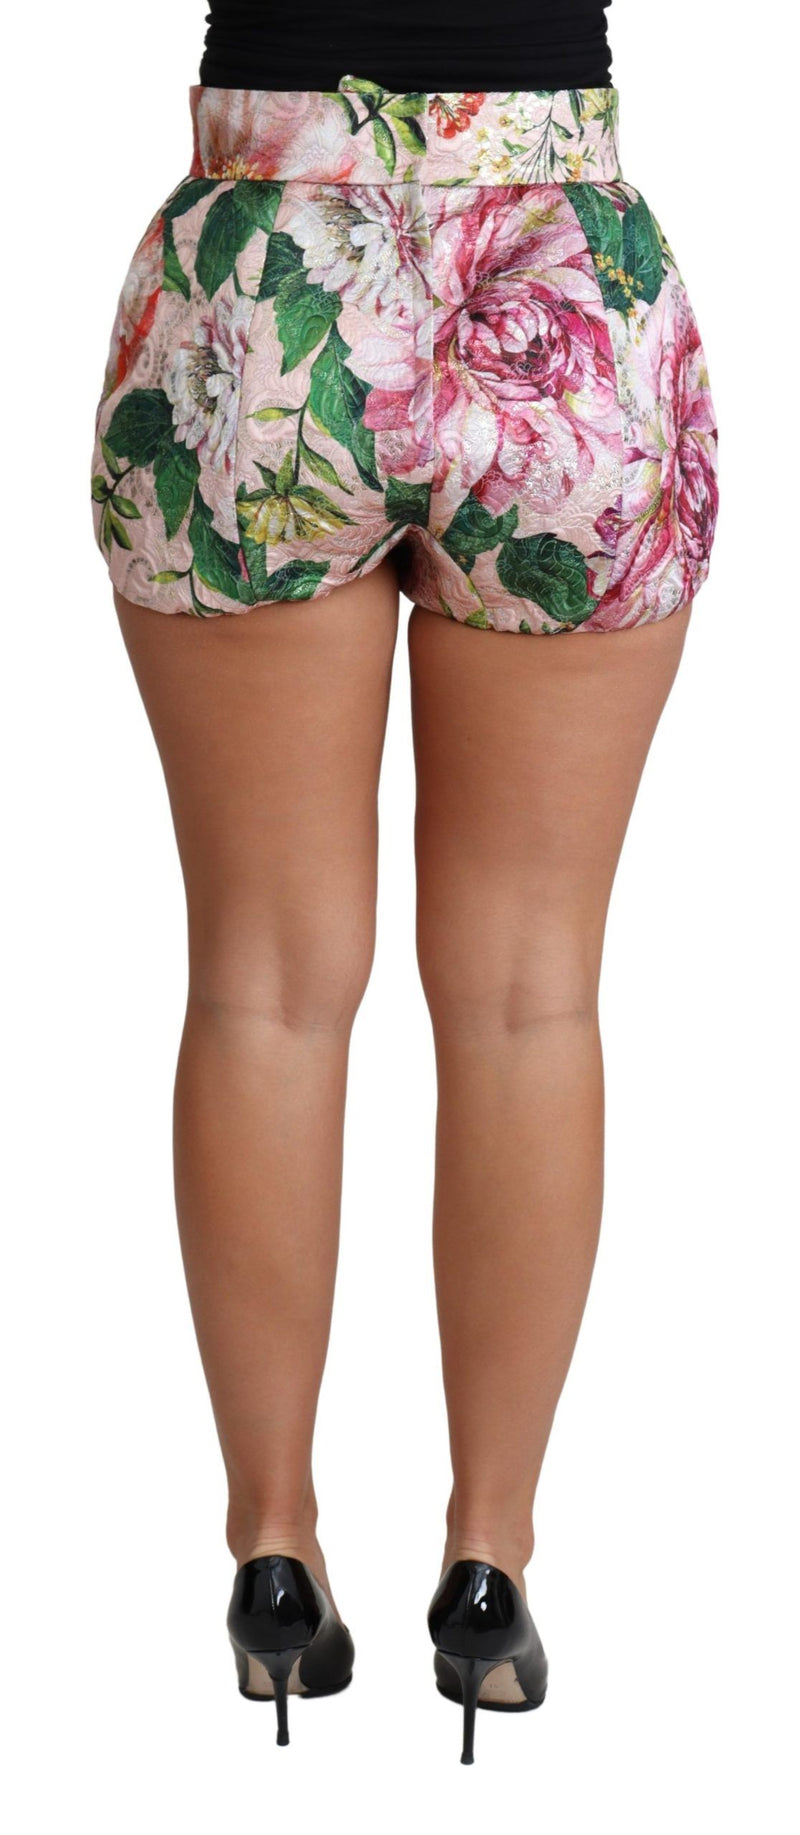 Dolce & Gabbana Pink Cotton Floral Print Hot Pants Women's Short